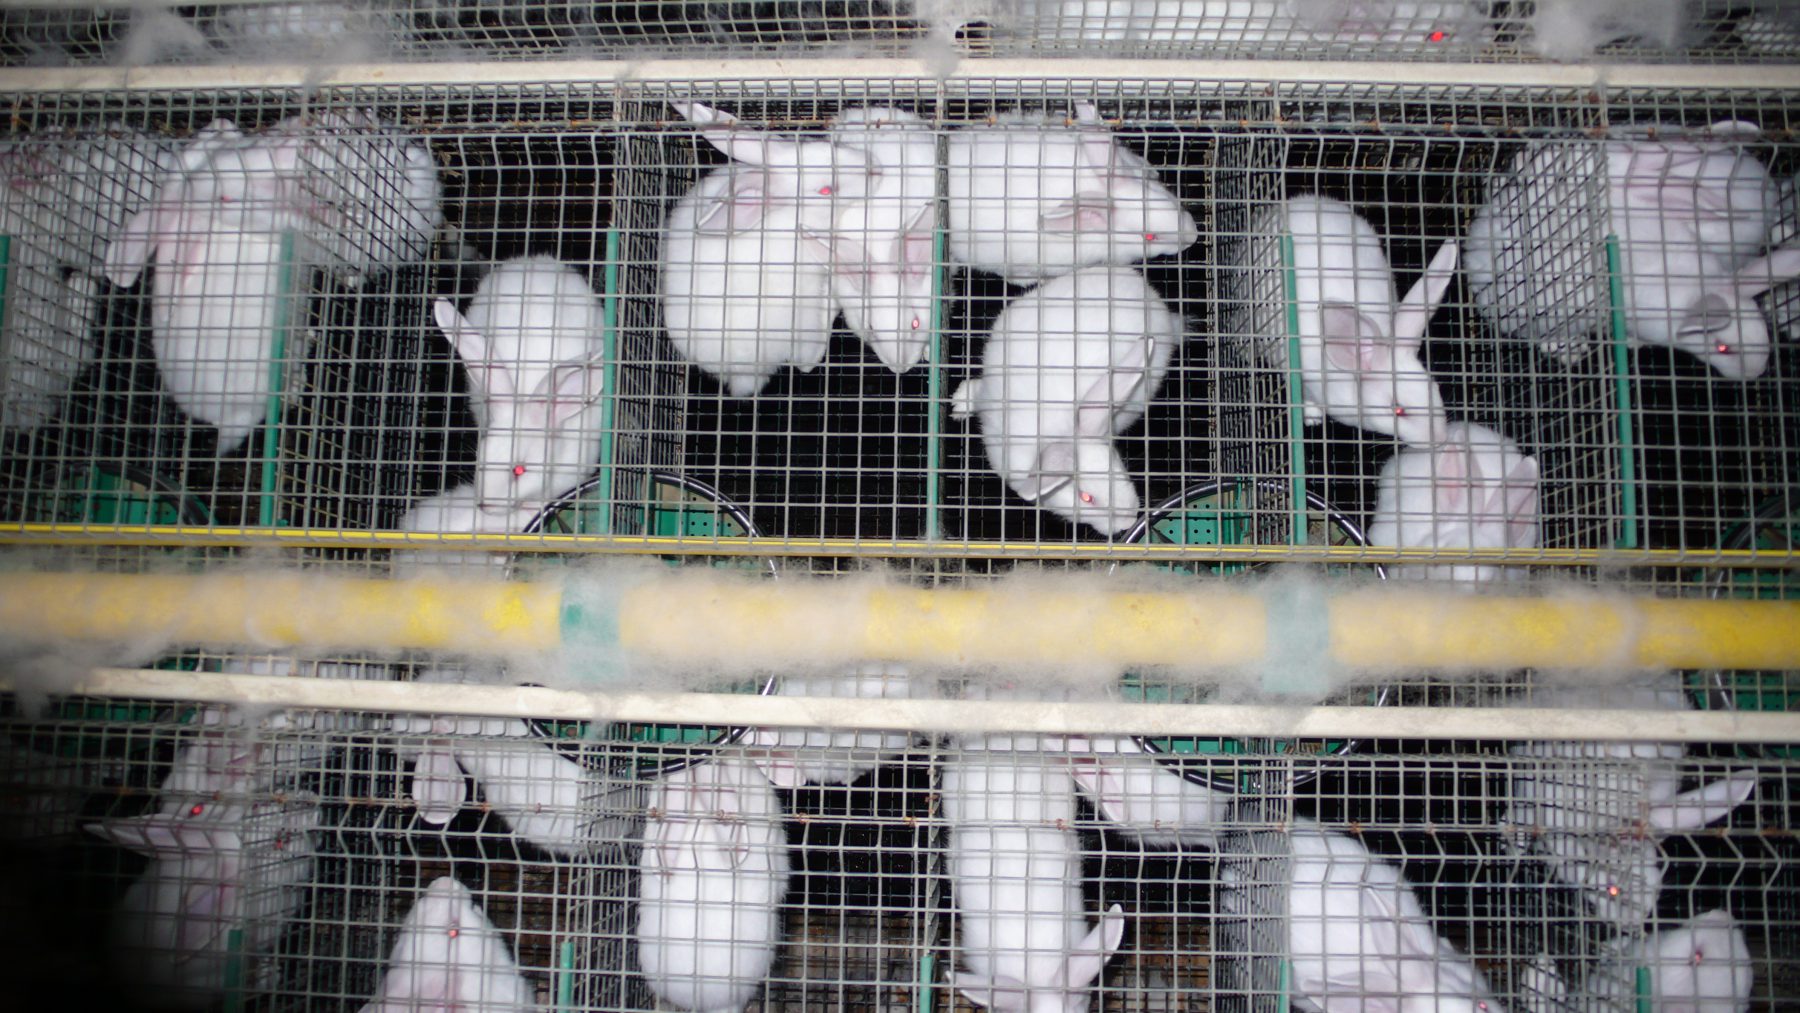 Rabbits are factory farmed